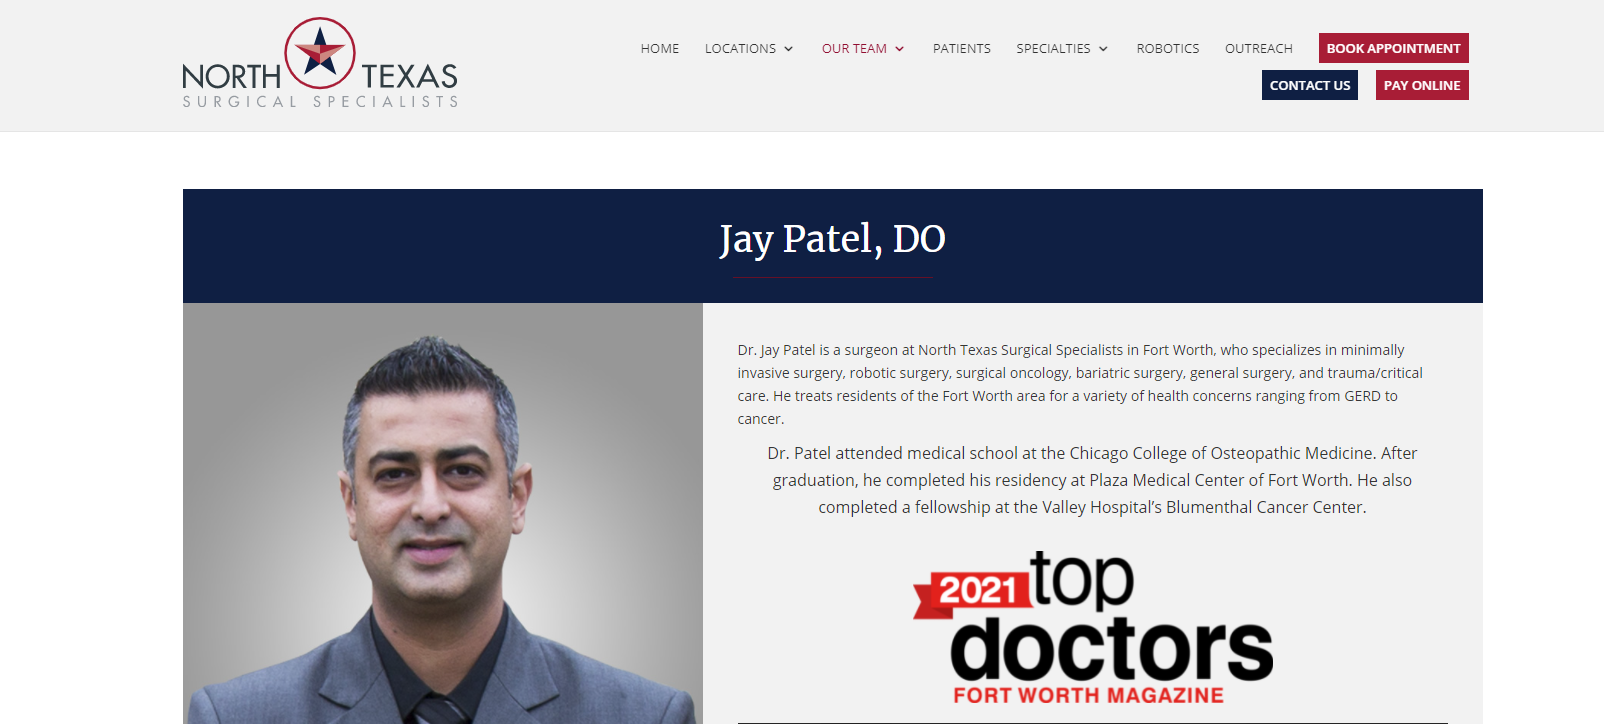 Jay Patel, DO